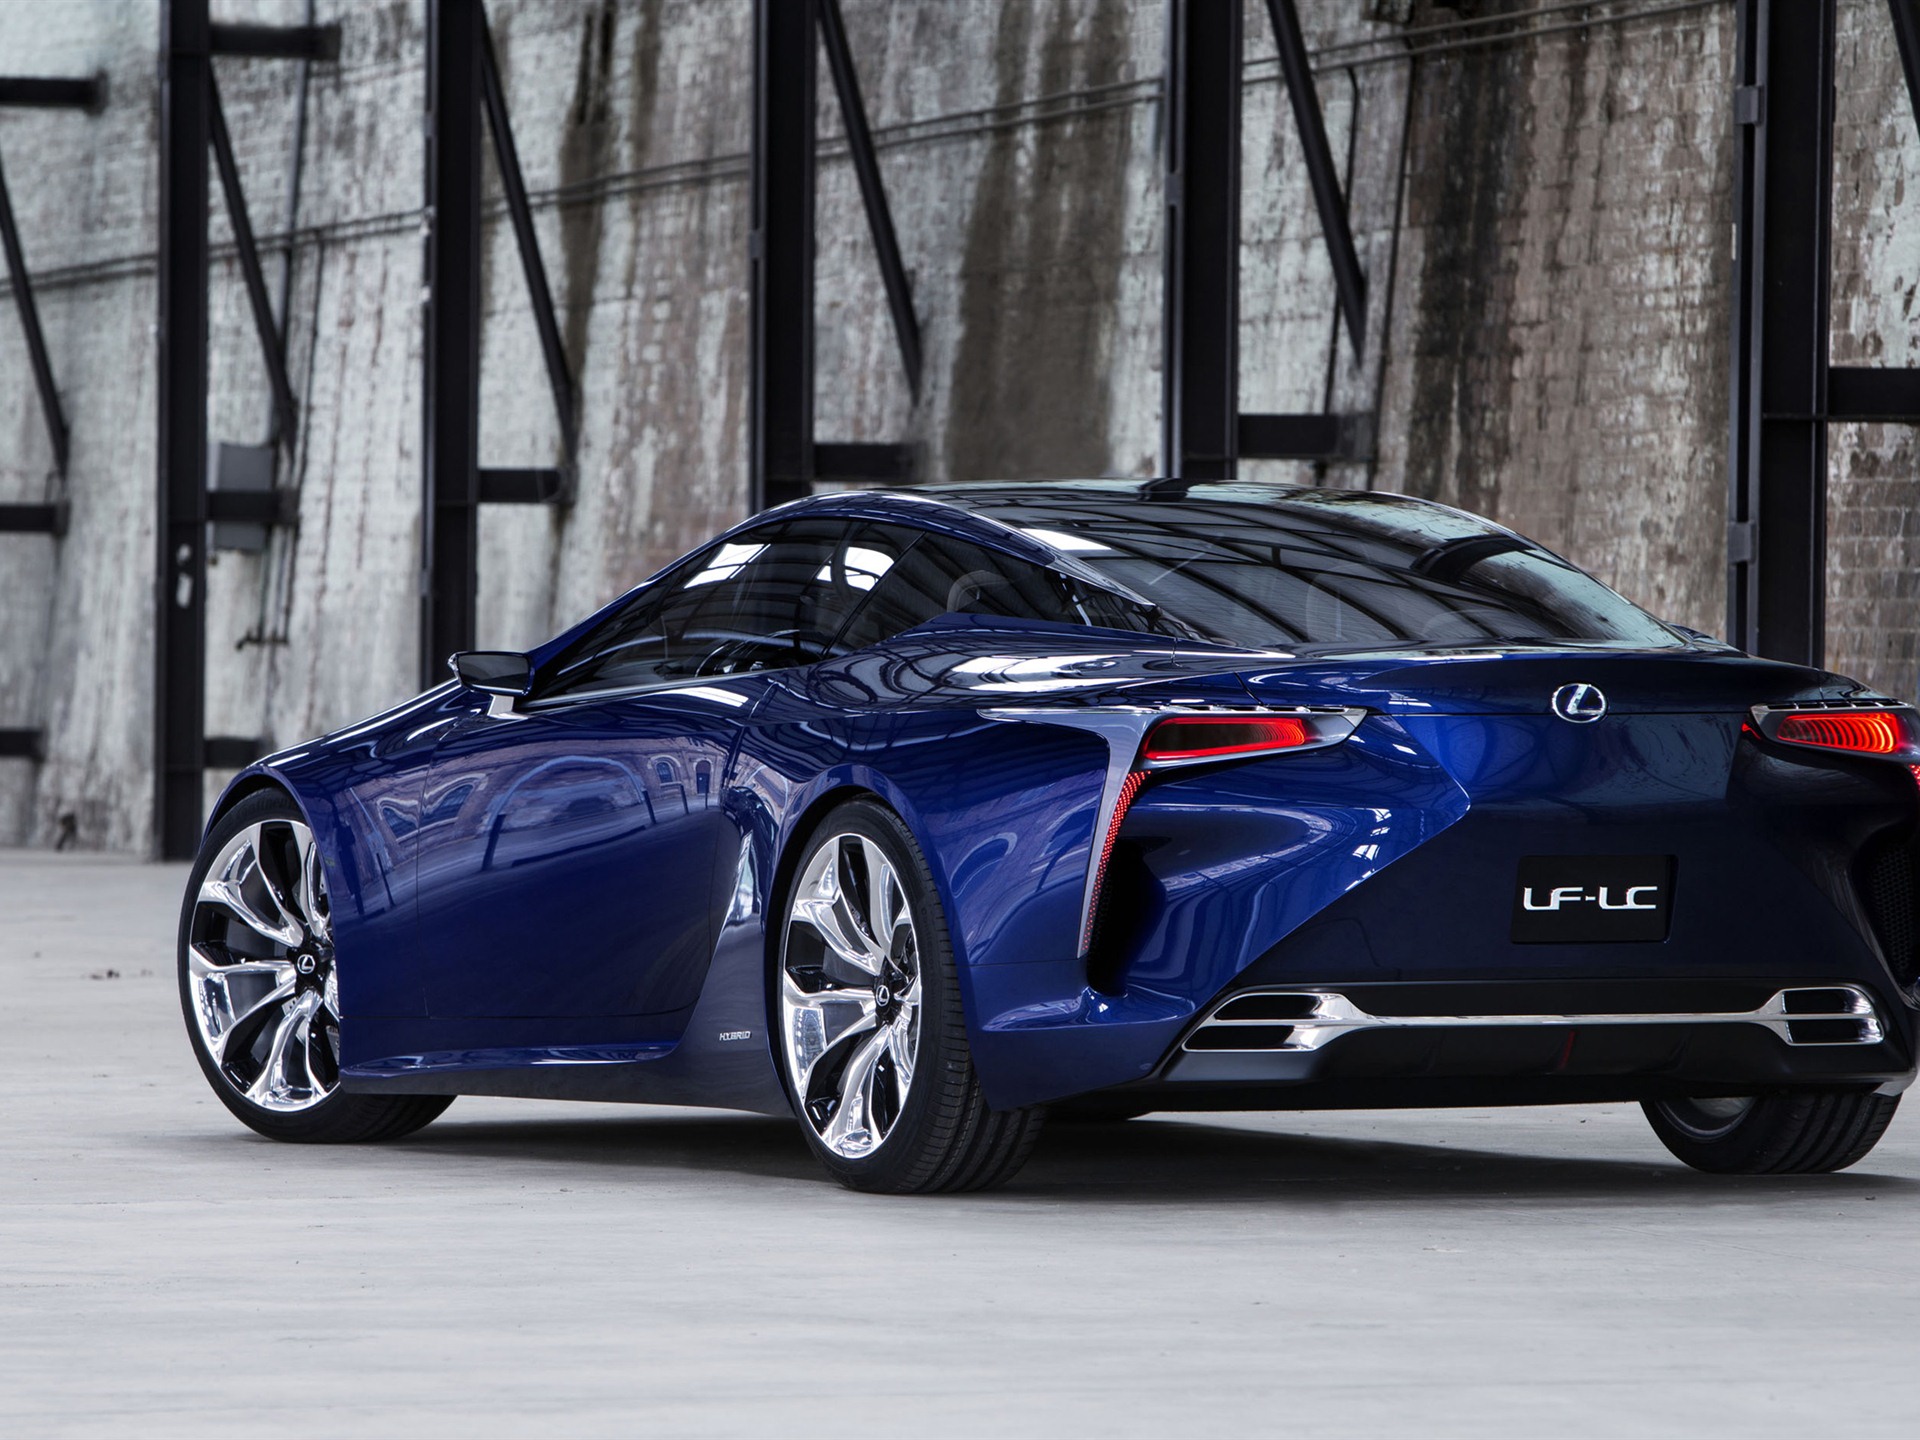 2012 Lexus LF-LC Blue concept 雷克萨斯 蓝色概念车 高清壁纸5 - 1920x1440